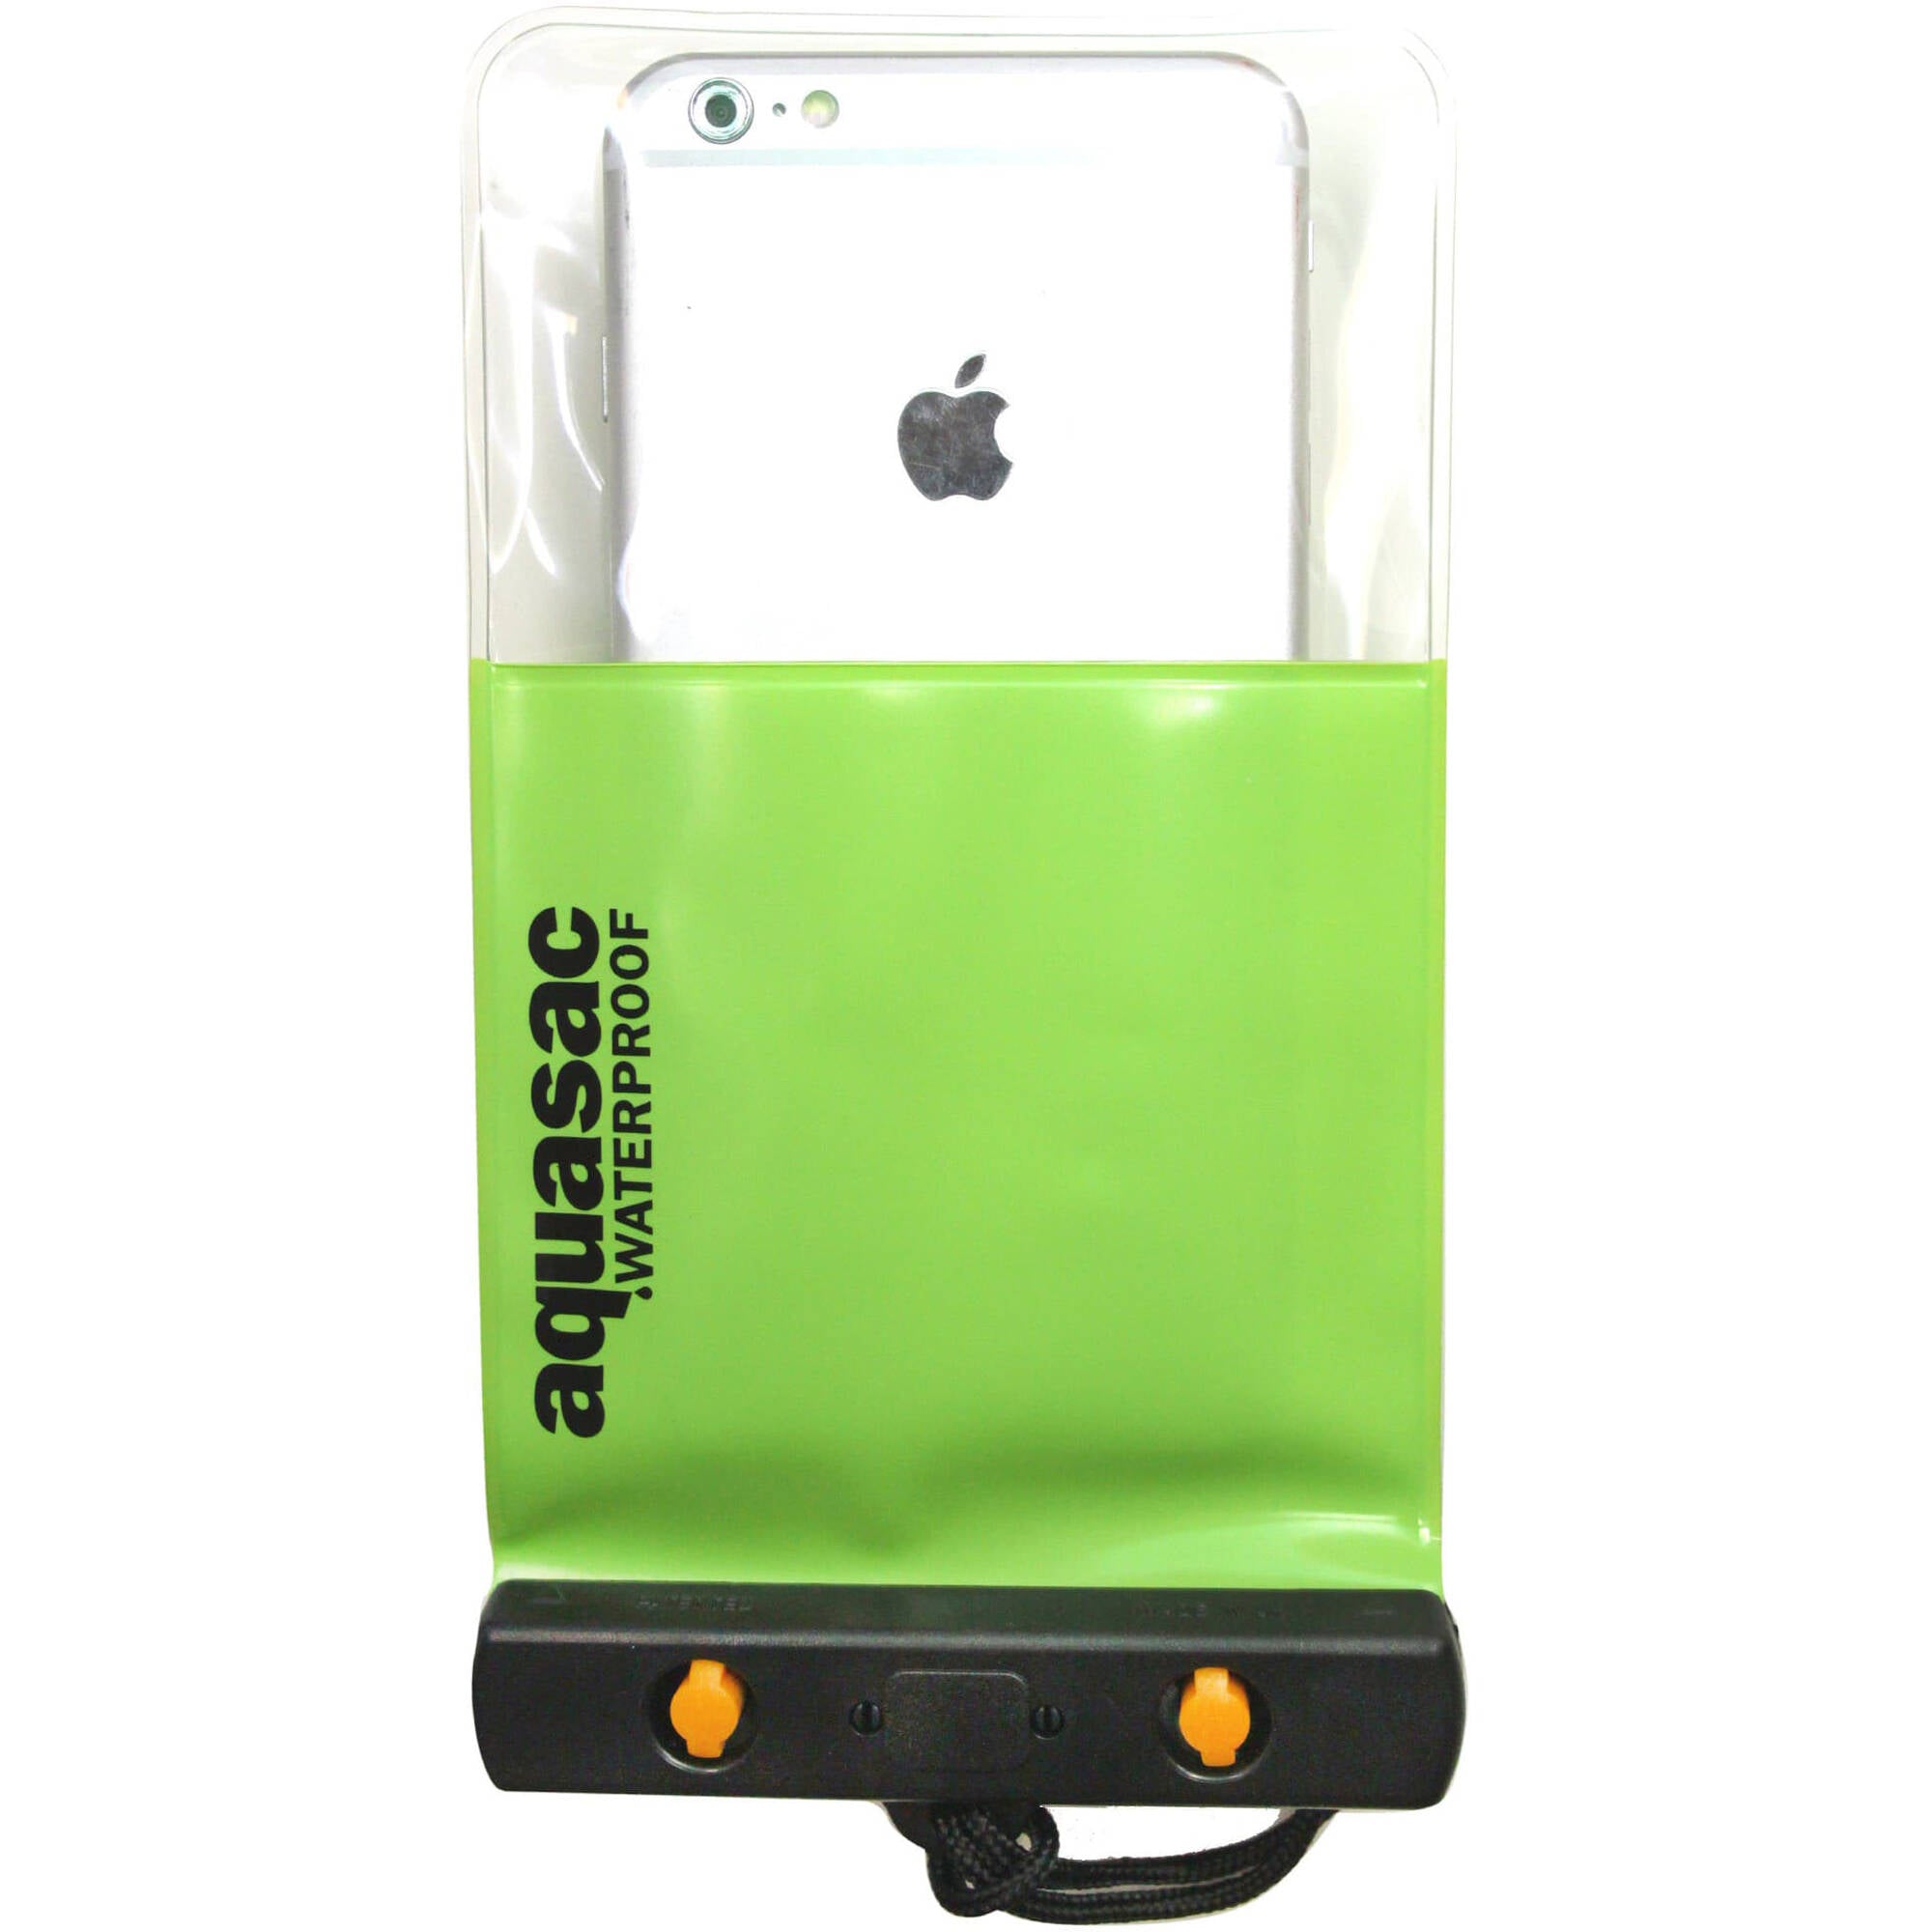 Aquapac Aquasac Economy Waterproof Phone Case - Green